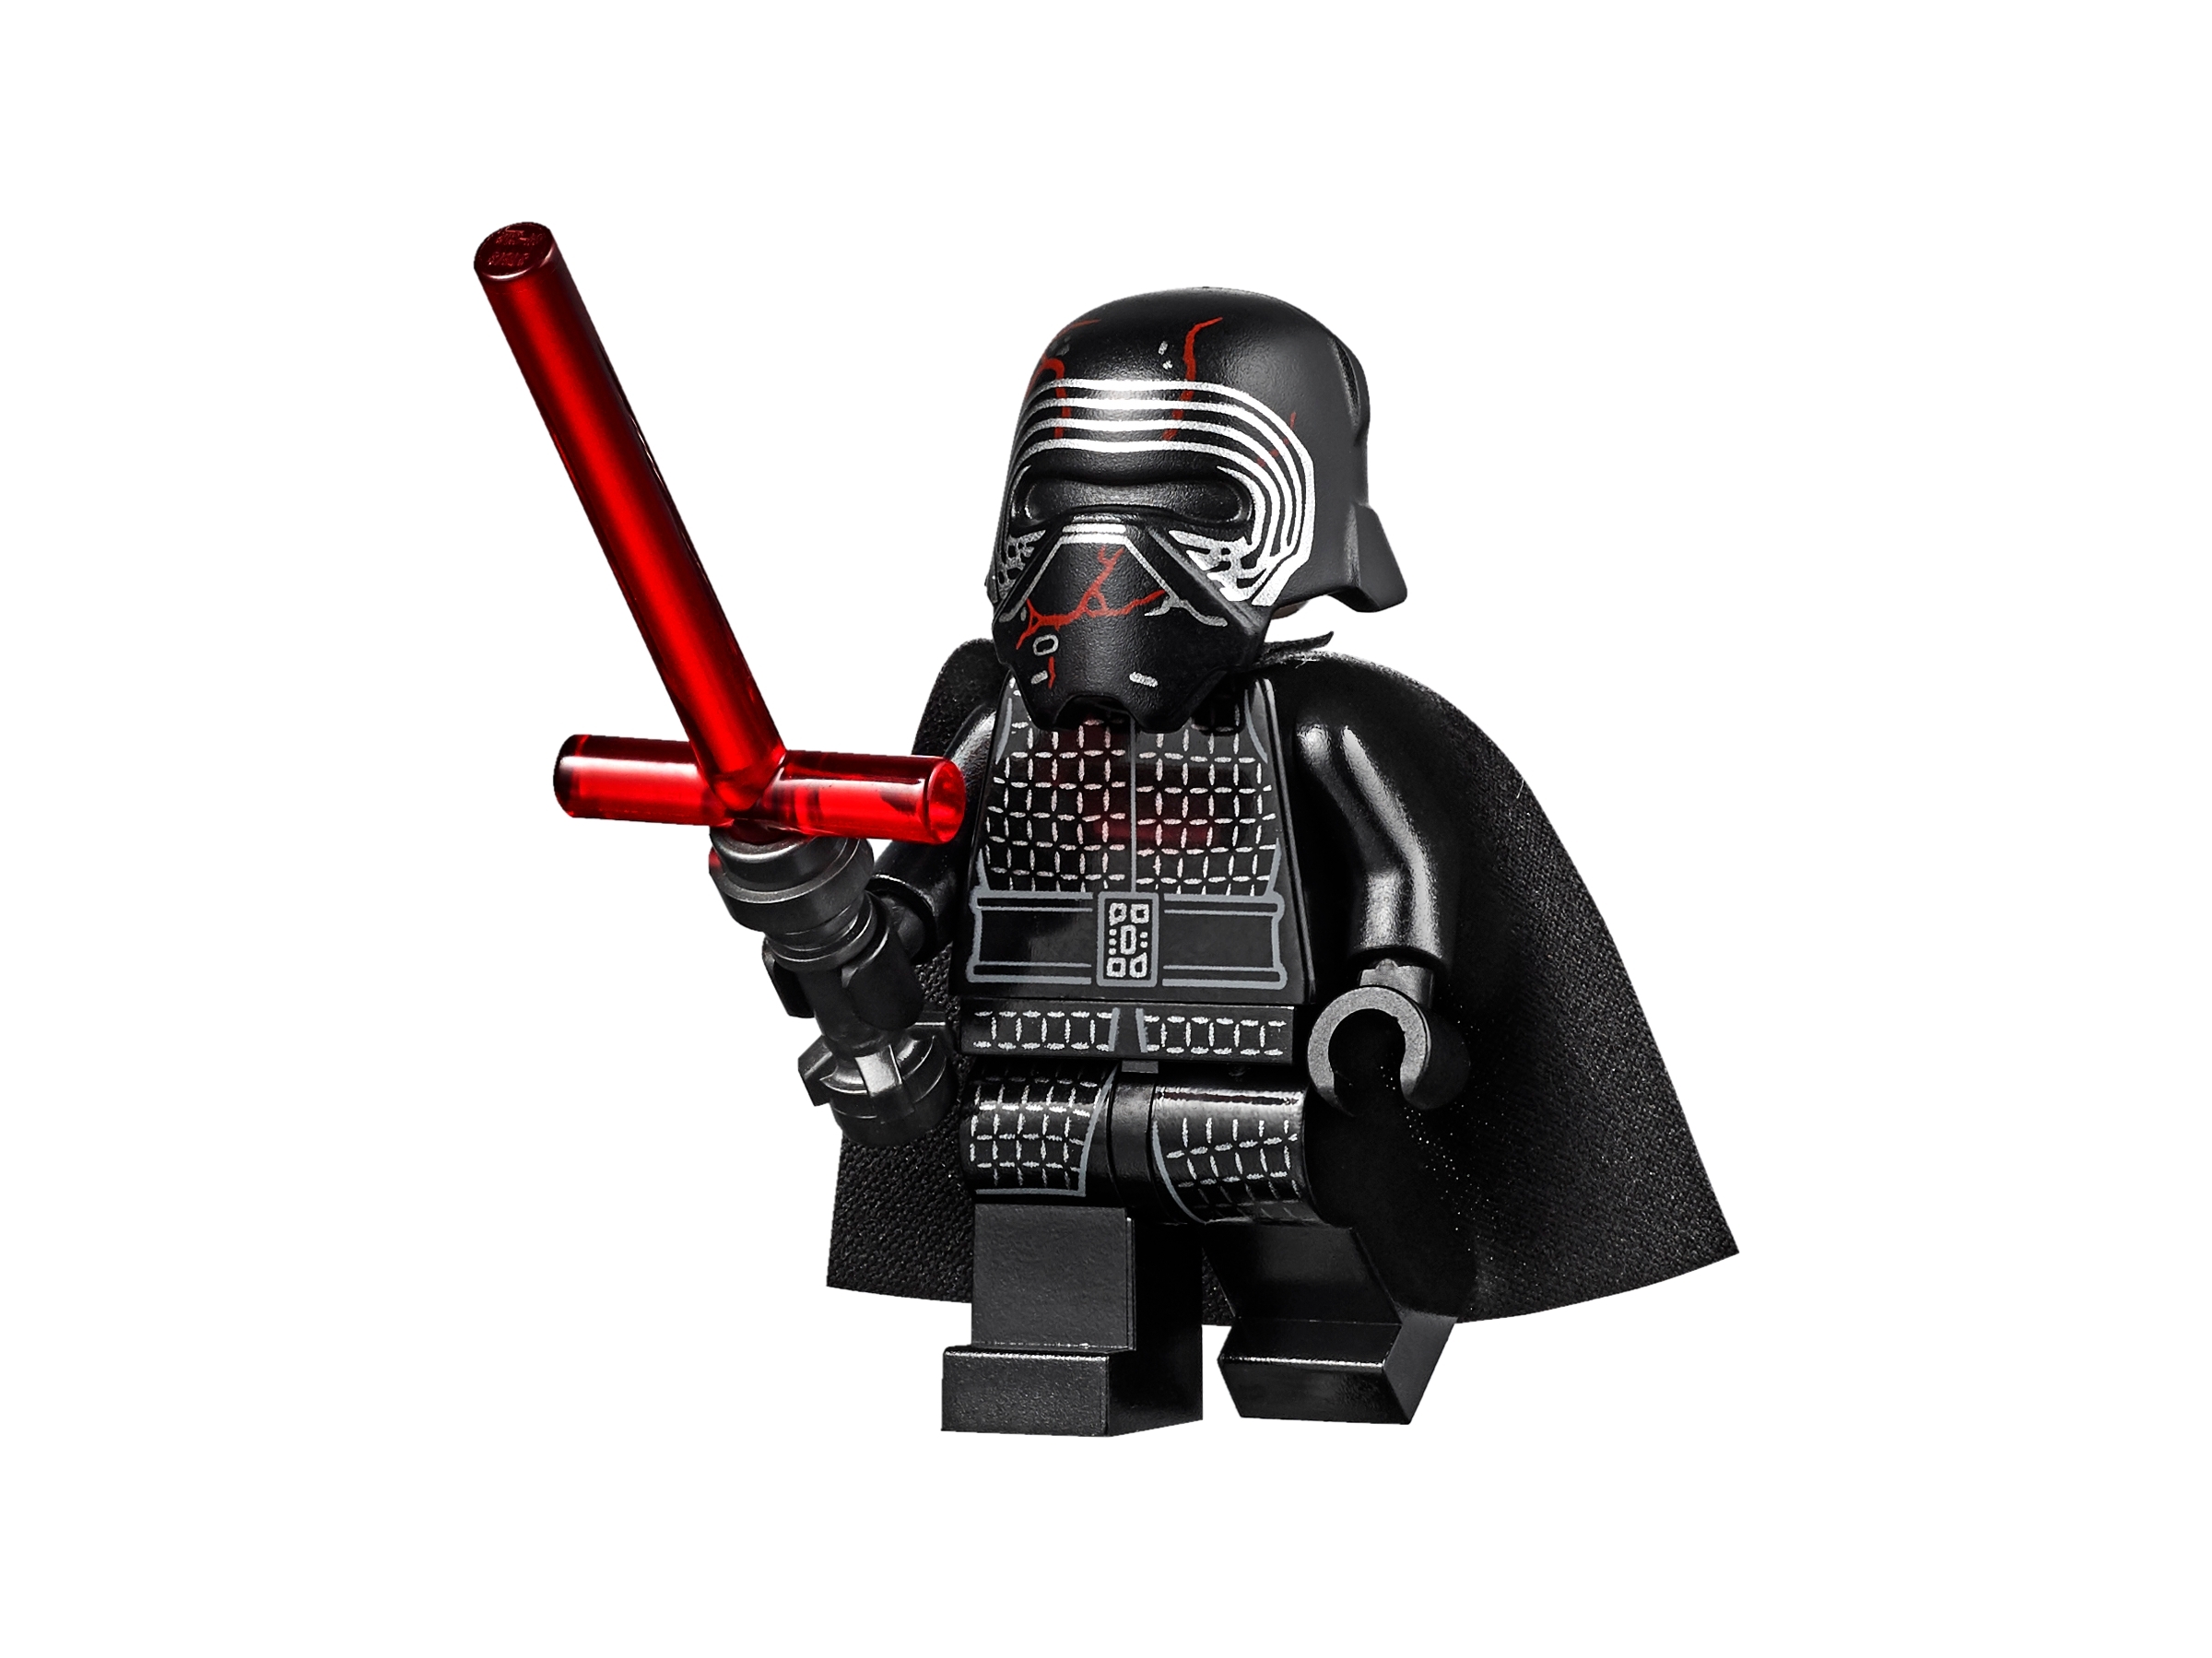 LEGO Star Wars 75256 pas cher, La navette de Kylo Ren